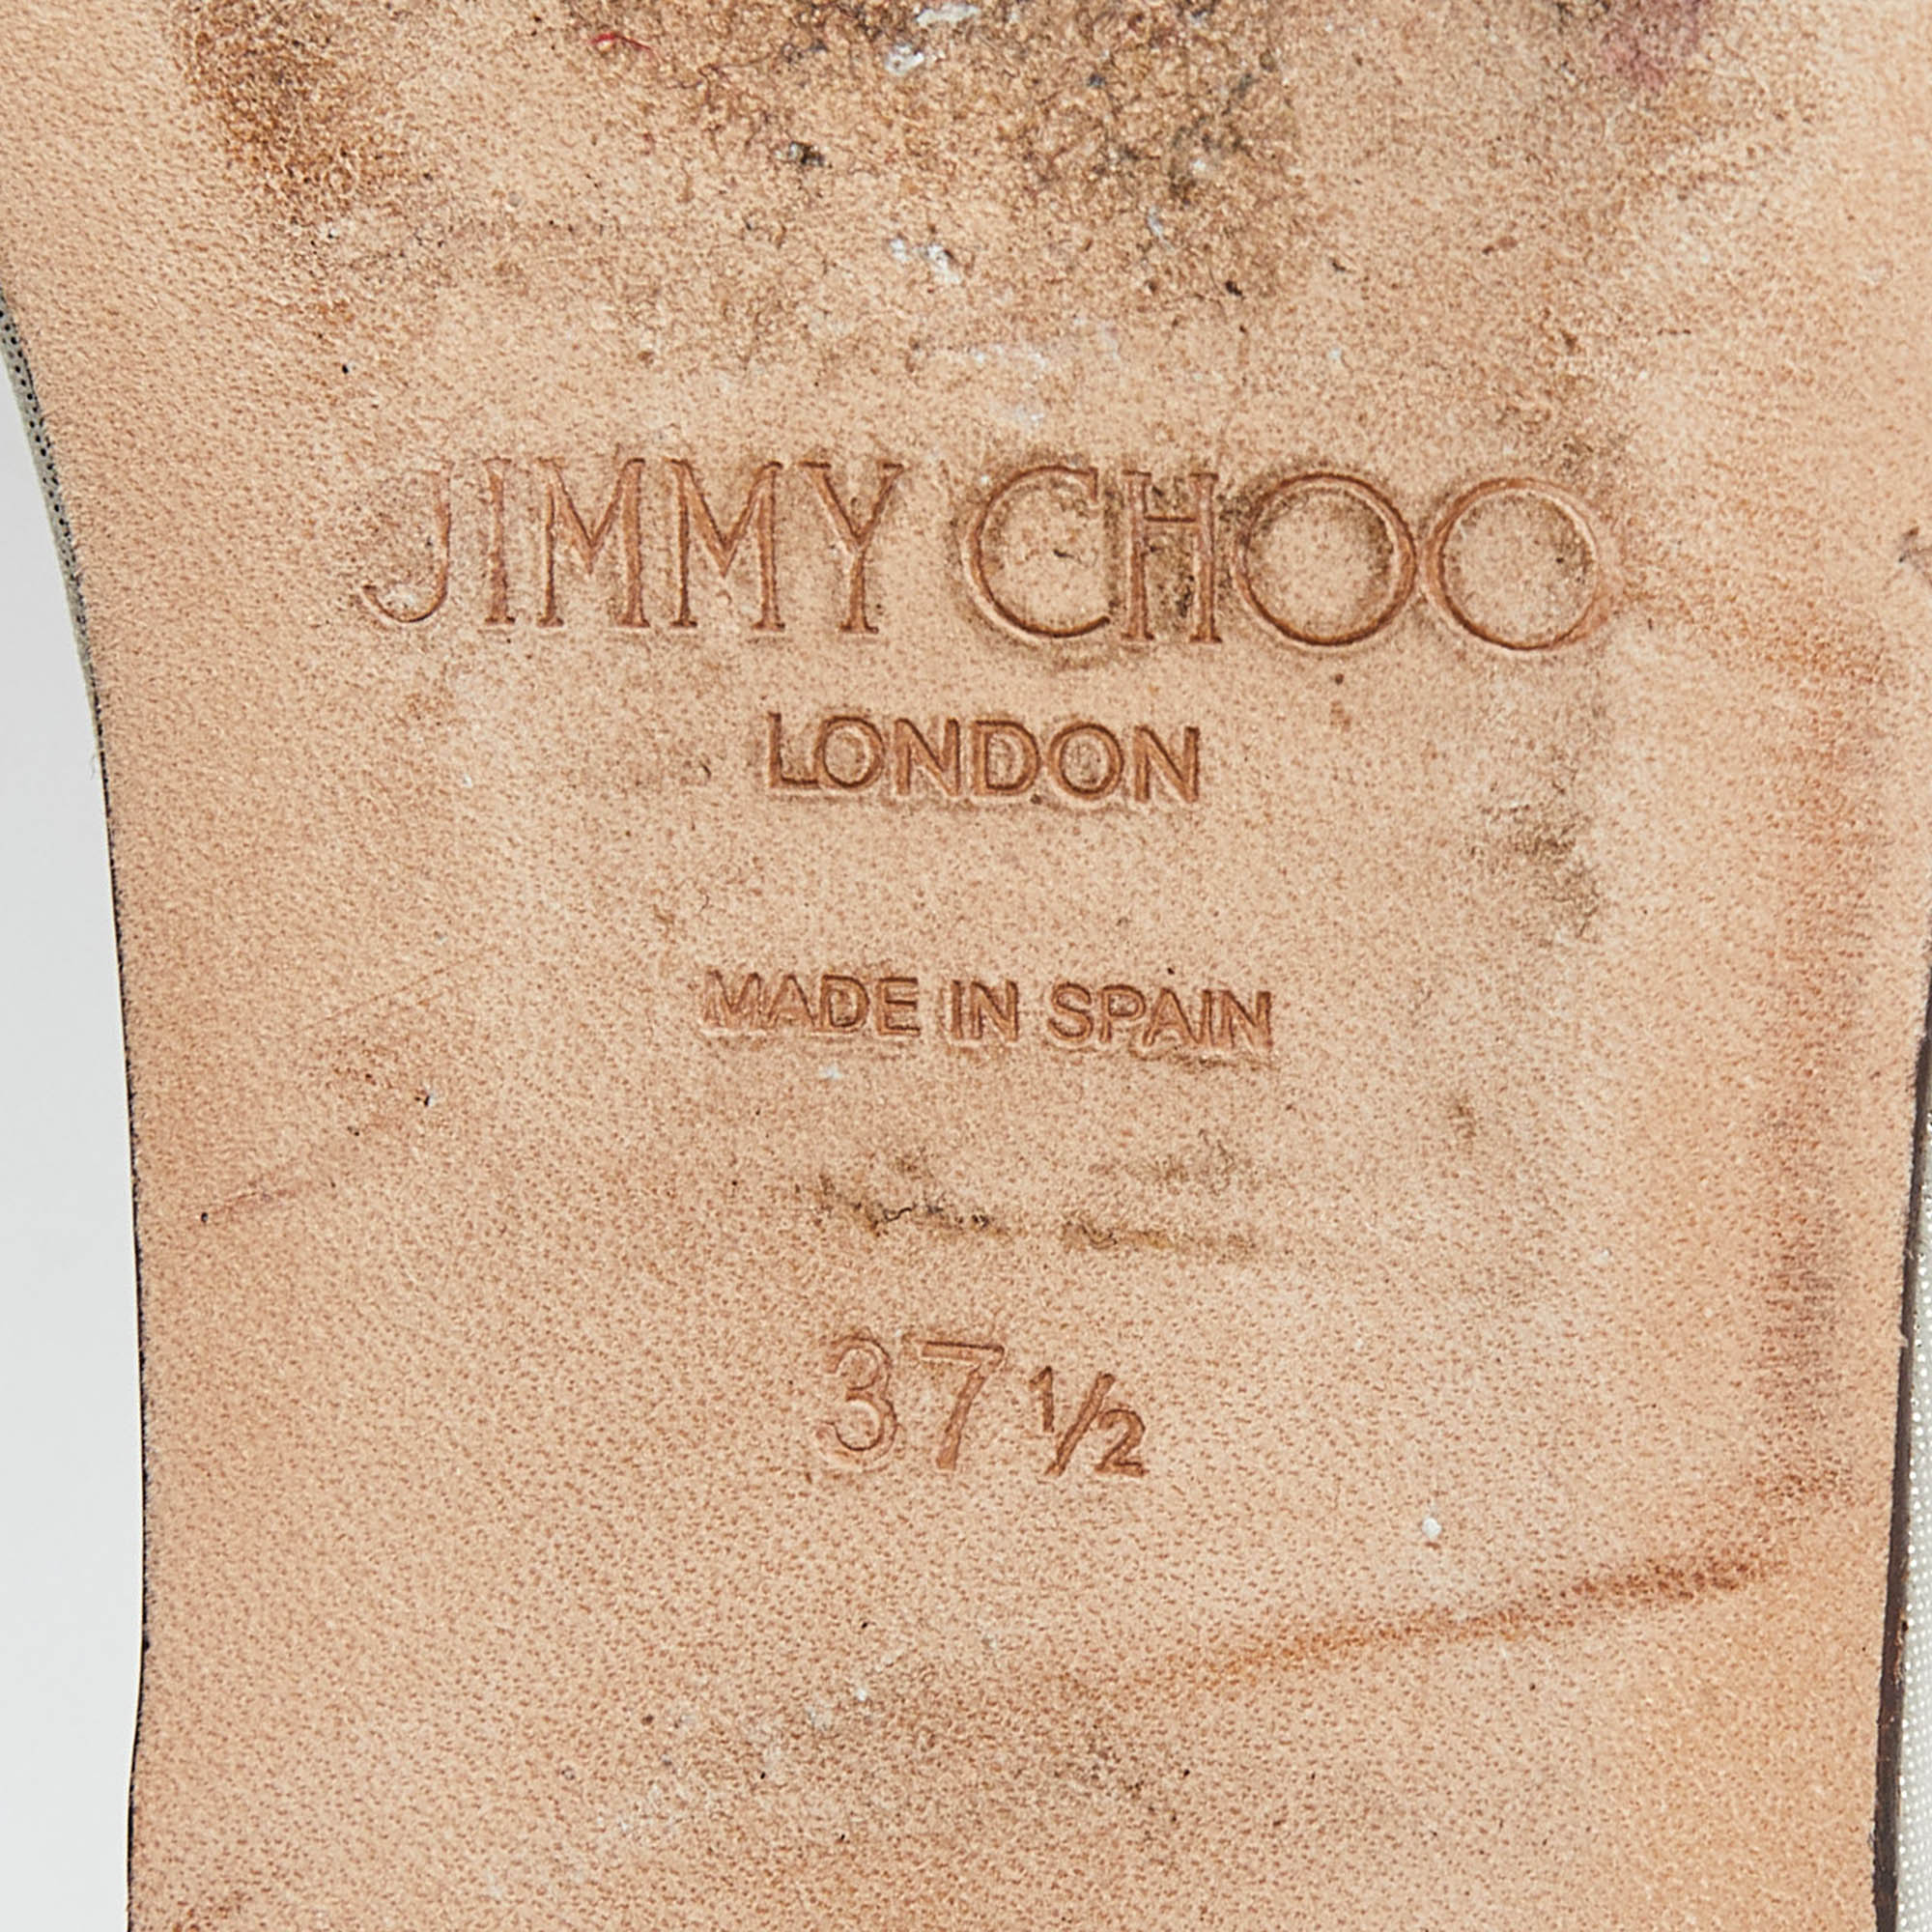 Jimmy Choo Metallic Glitter Nubuck Leather Bella Flat Sandals Size 37.5